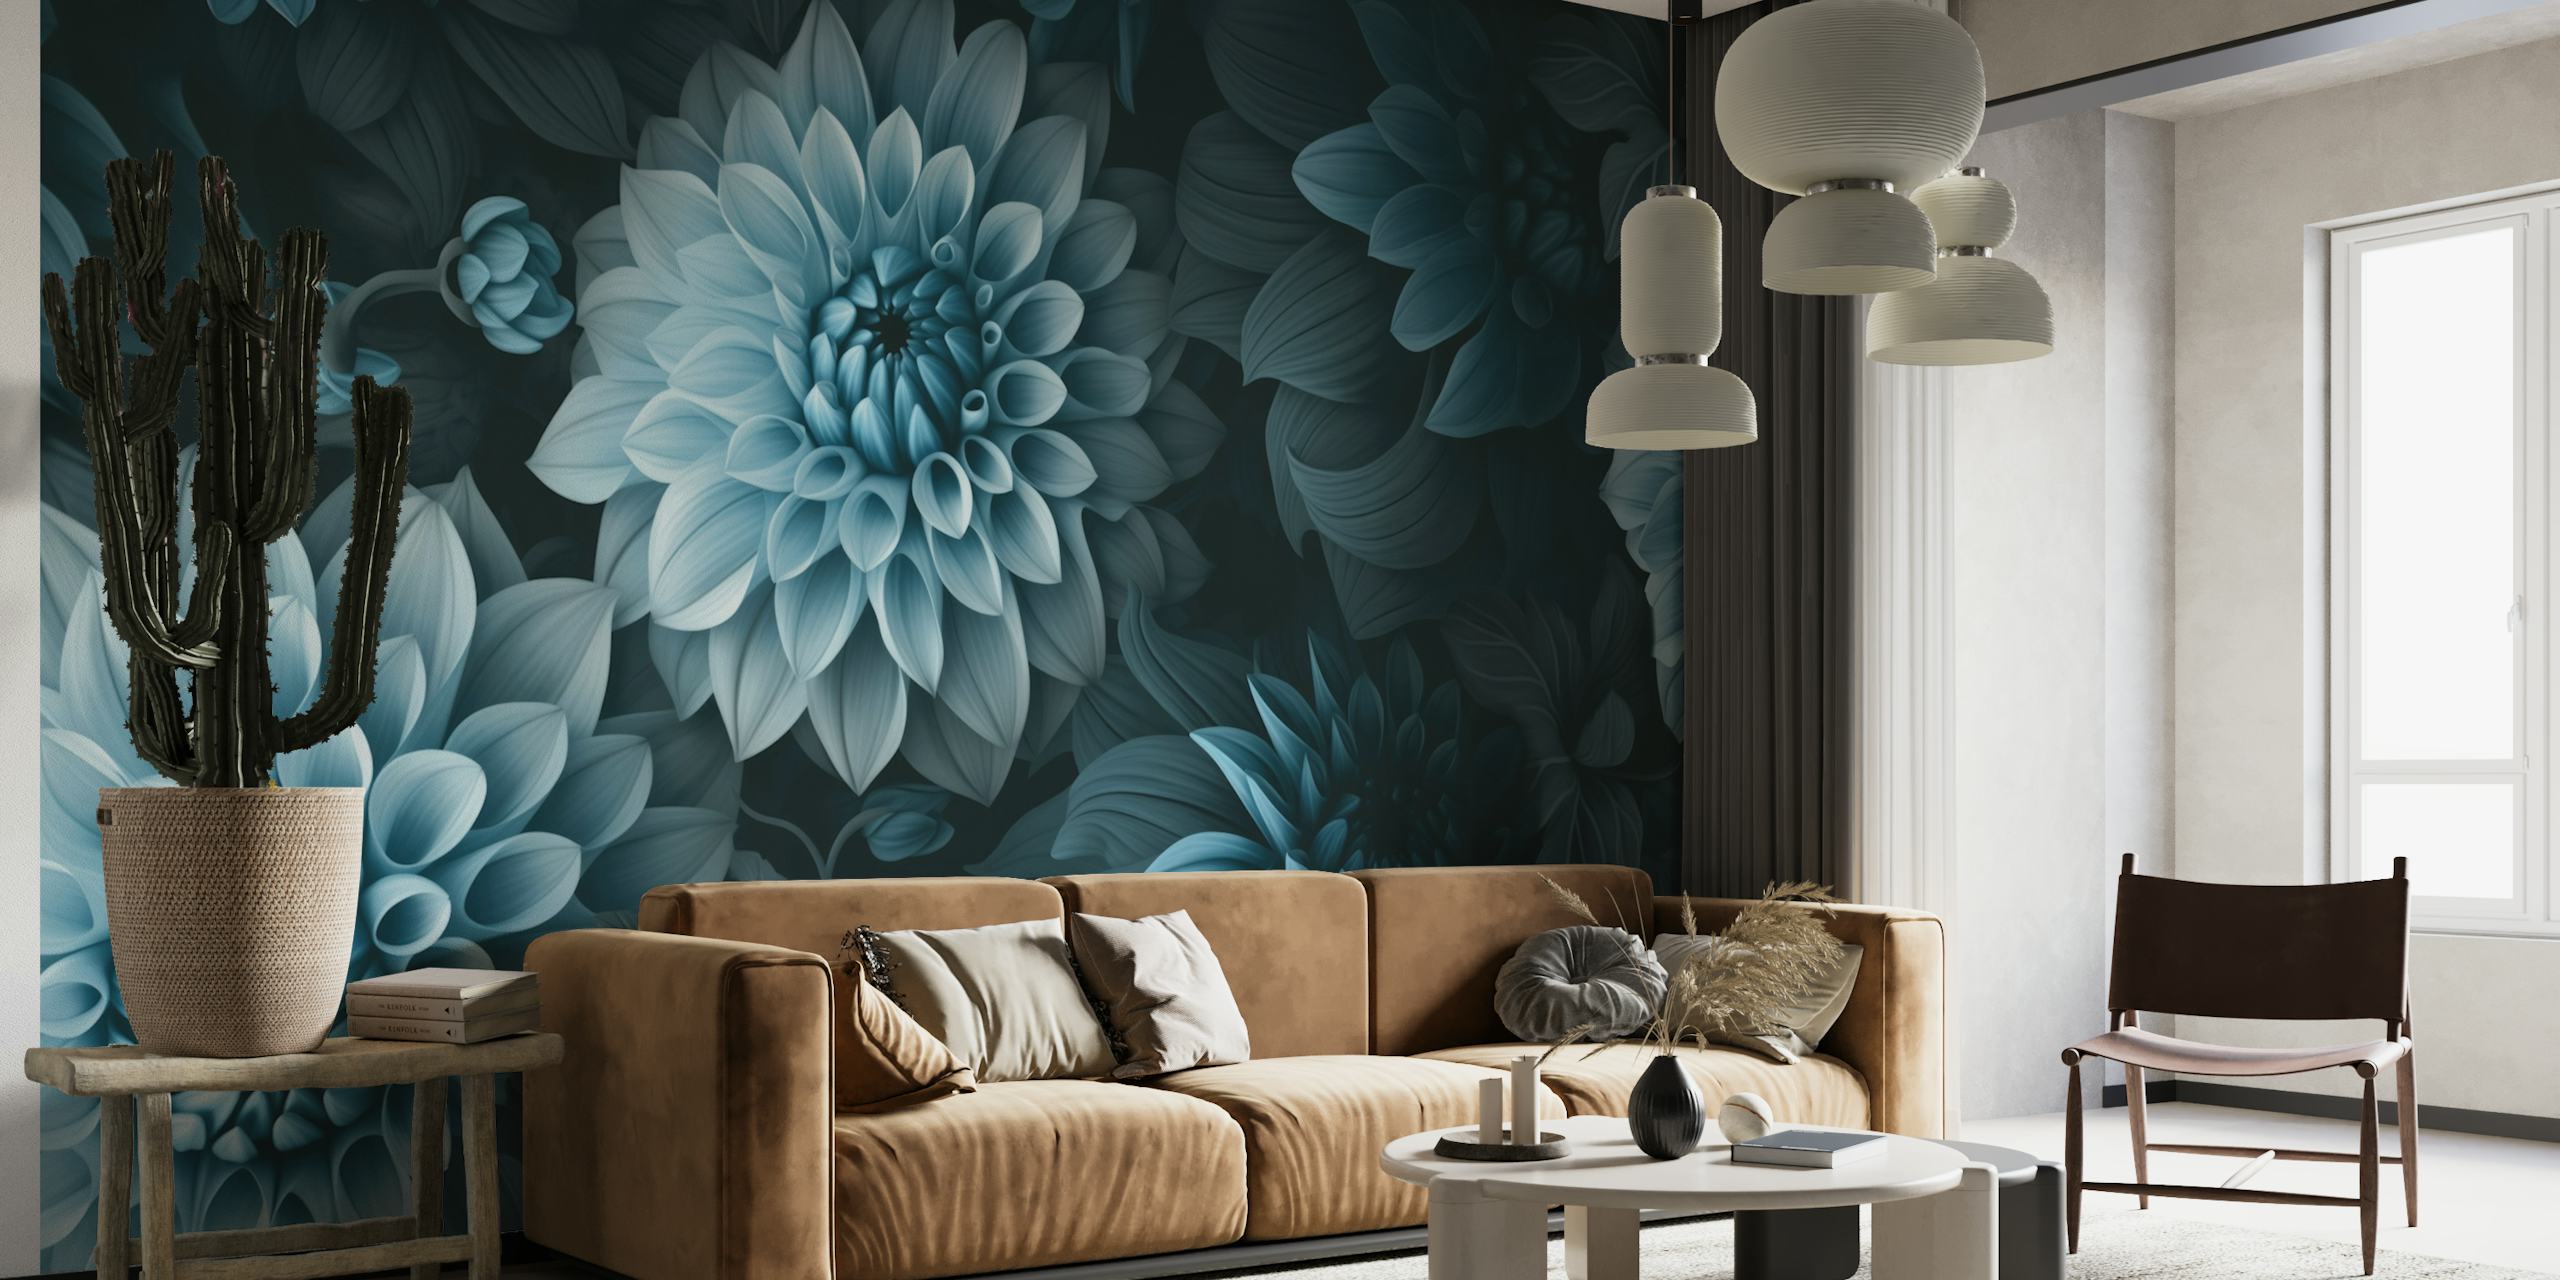 Overdådig Moody Dahlia Flowers vægmaleri med rige blågrønne og blå nuancer